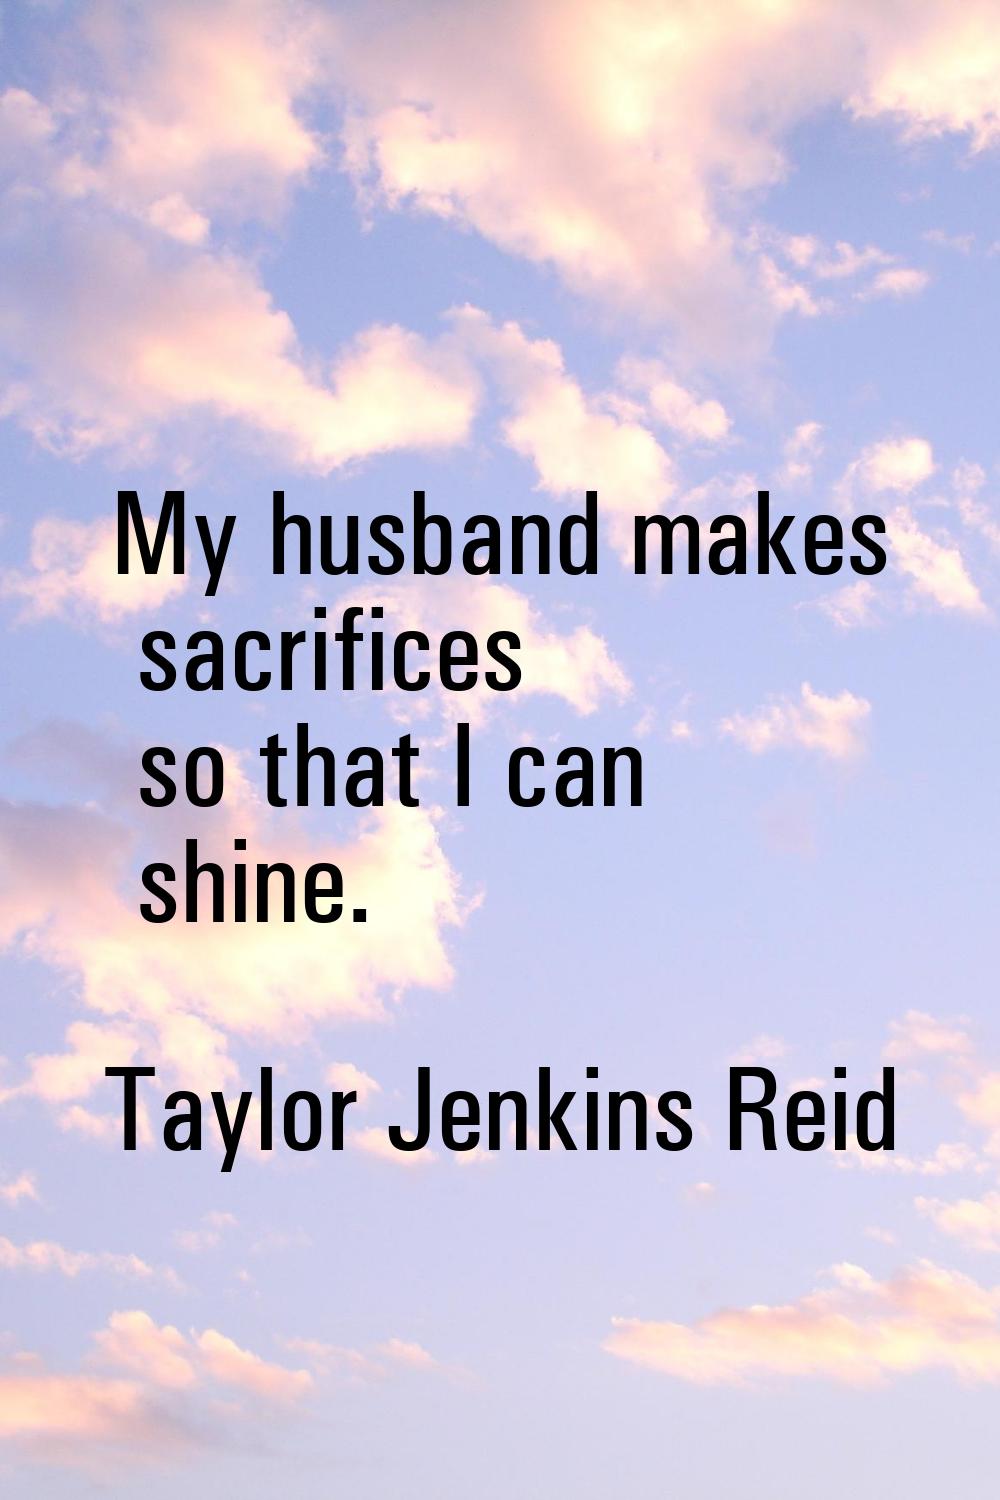 My husband makes sacrifices so that I can shine.